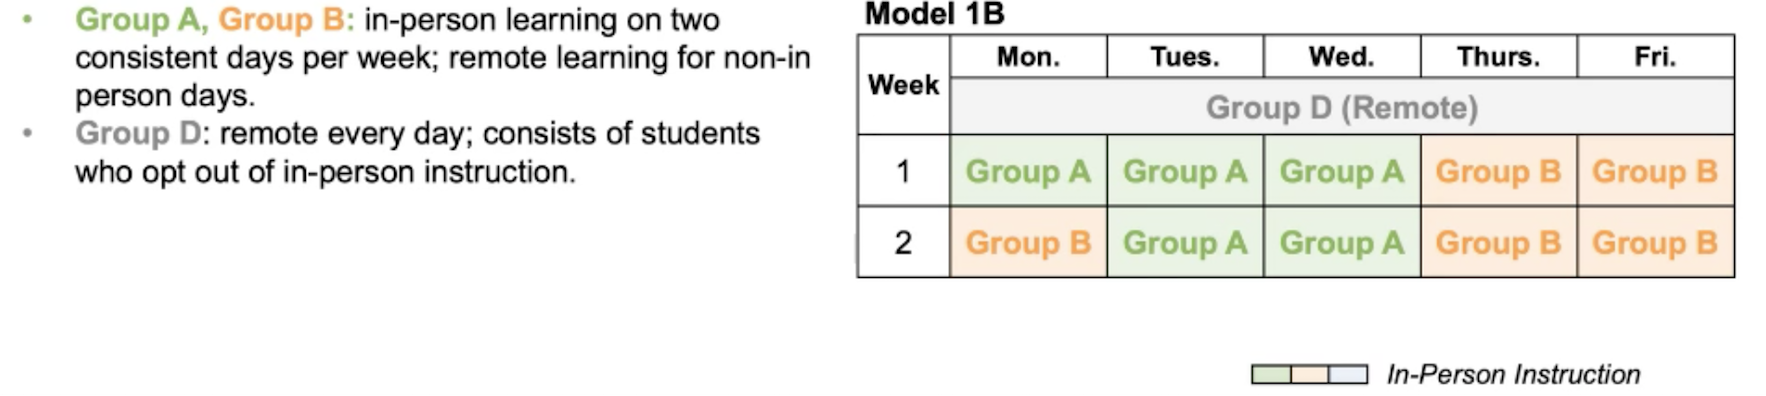 Model 1B Schedule